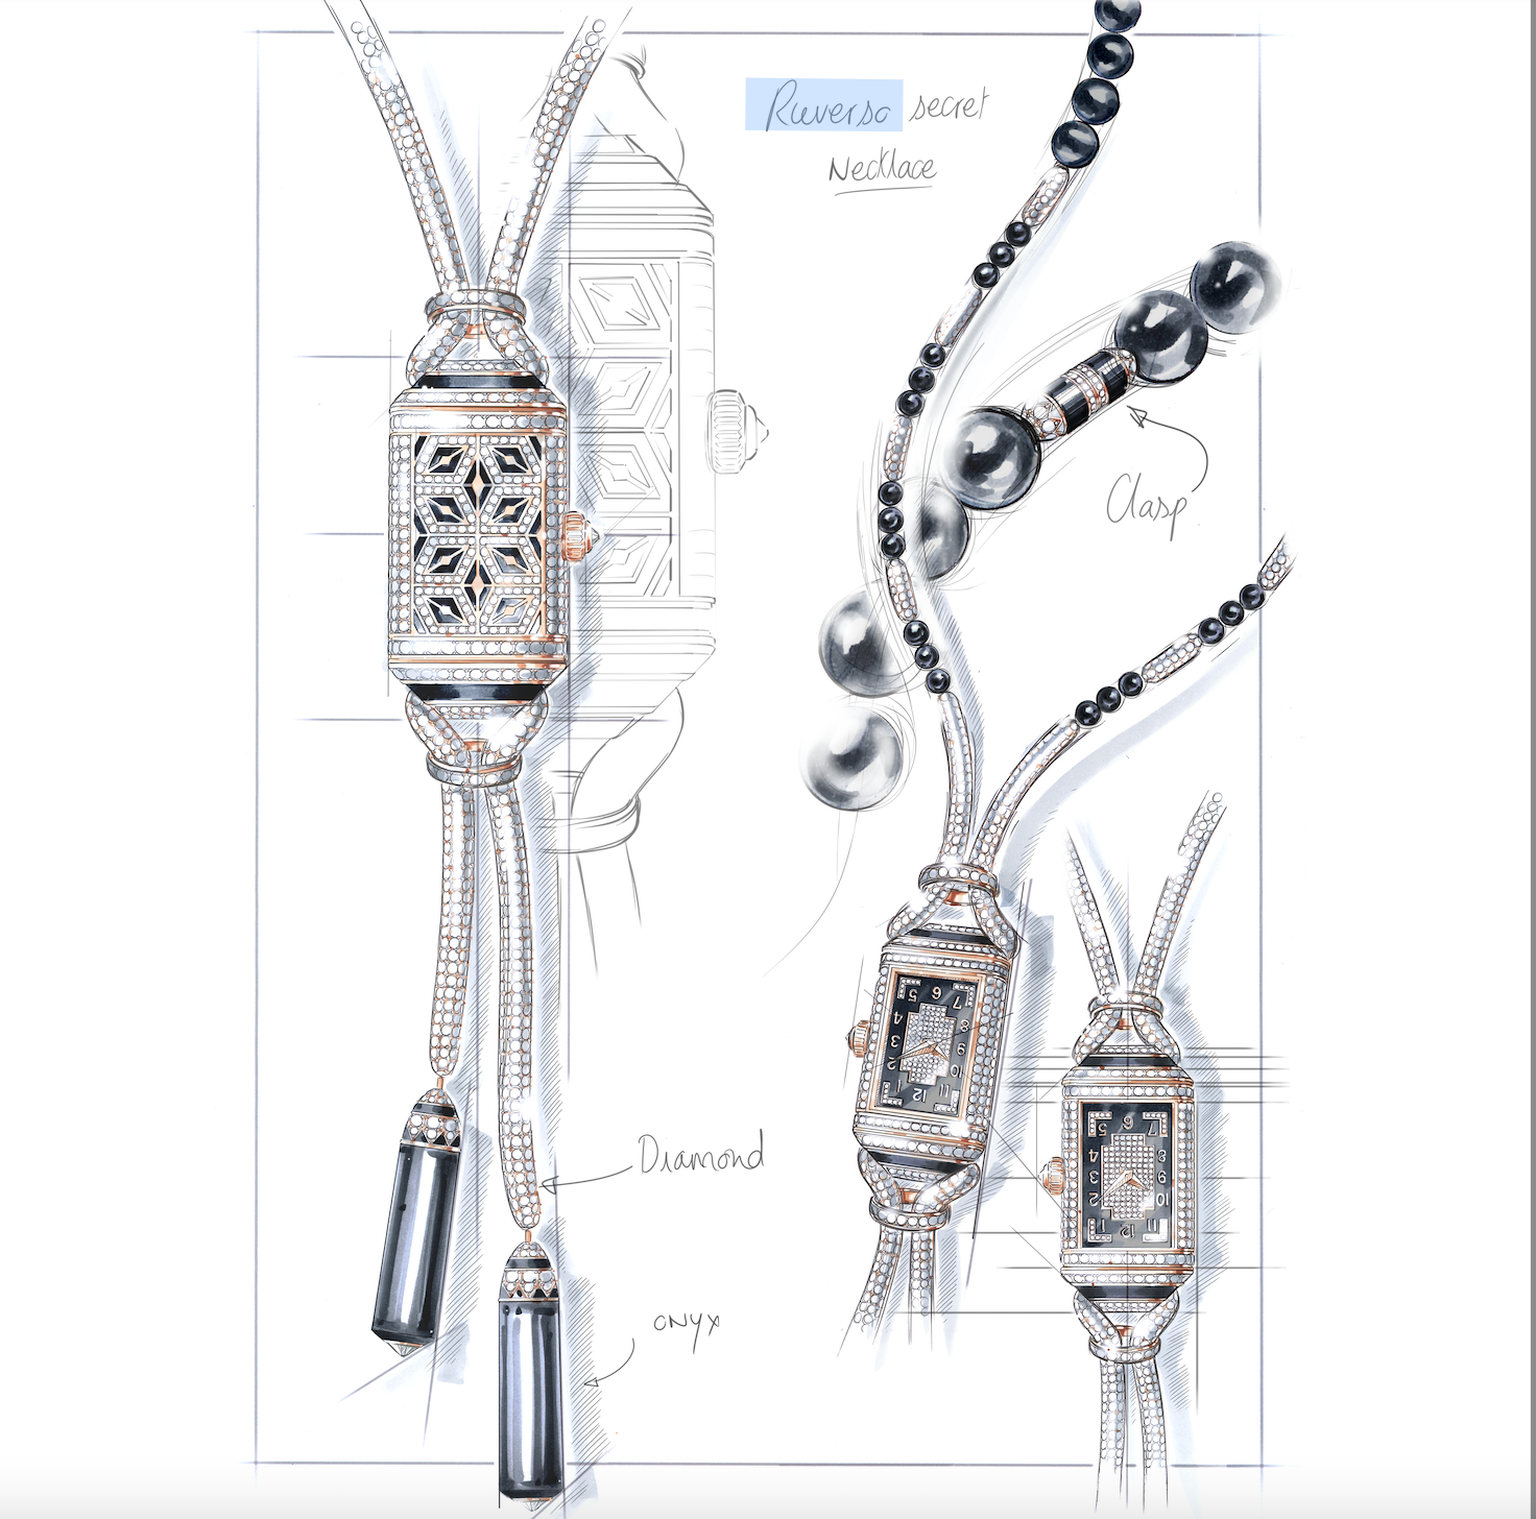 The Reverso Secret necklace by Jaeger-LeCoultre Sketch